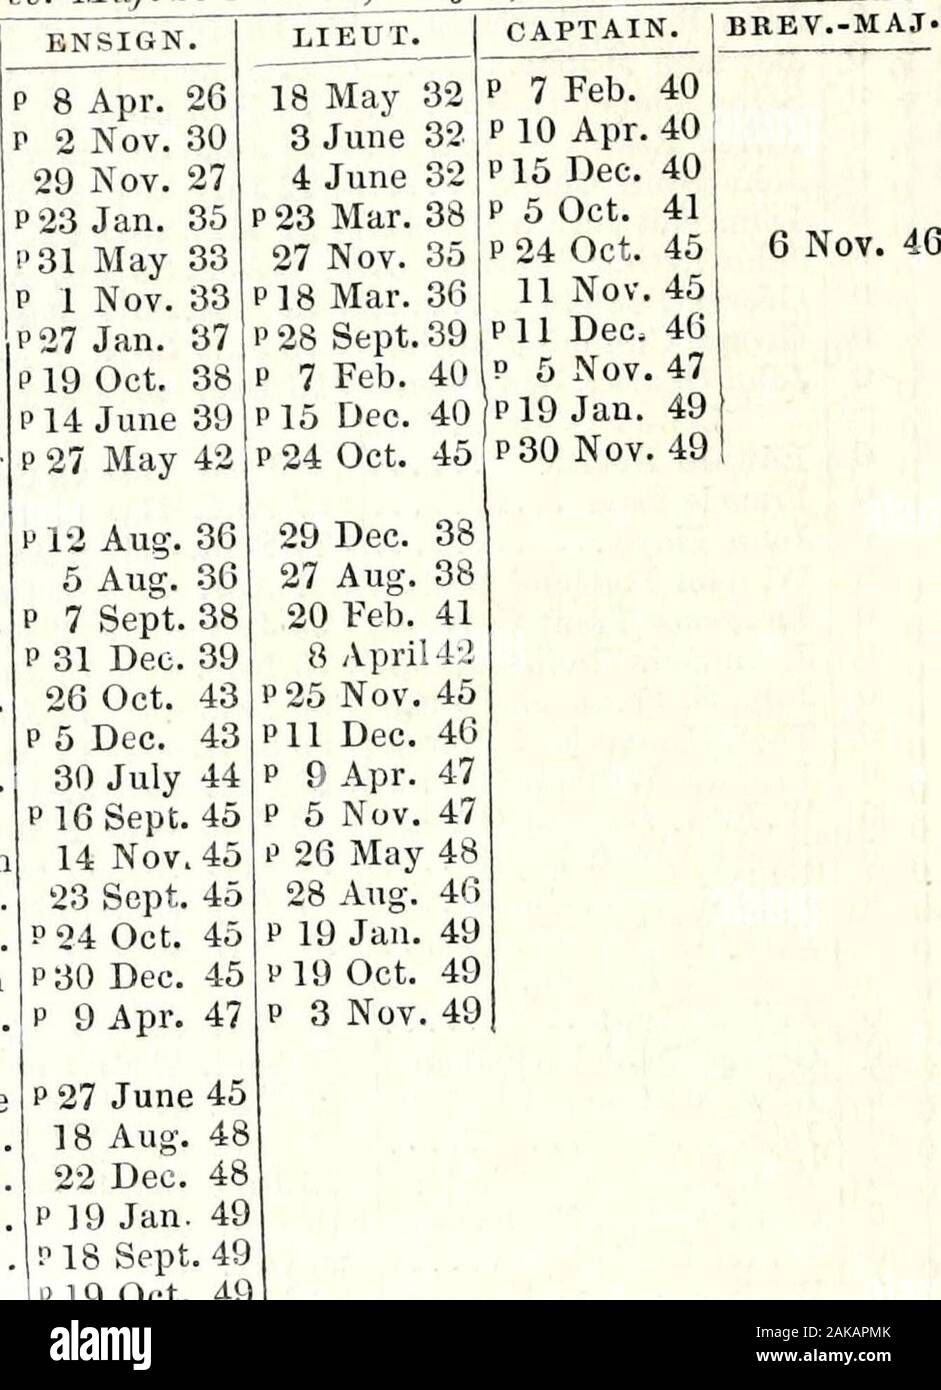 The new annual army list . ^CB. ^«. 24 Nov 14; i.. 13 Nov.^8;Capt. P 1 Aug. 22 J 3Iajor, 21 Nov. 34 ; Brevet Lt.-Col. 23 Dec. 42, i&gt;f.- i./S.^-^^AruS 0Leary,3 e,is. 18 Apr. 11; Lieut. 25 Jan. 14 ; Capt. 27 Nov. 35T iJrer.i-^/ry. 23 Dec. 42 ; Maj. 11 Nov. 4o.Henry Charles Barnstou Daubeney,^ CB. Ens.li Mar 29; i^ 9 Aug. 31, Capt P 28 Oct. 36; ^re^.-il/fl/. 23 Dec. 42; Major, p 25 Nov. 45. Captains. John BaillieRose^ John Coats^ Hector MCaskill Fred. Amelius Whimper^W. Holland L.D. CuddyHenry Thomas Butler .. Edmund Pitman^ George King John George Schaw,&gt; . •Edw. JohnTho. Montresor Lieuten Stock Photo